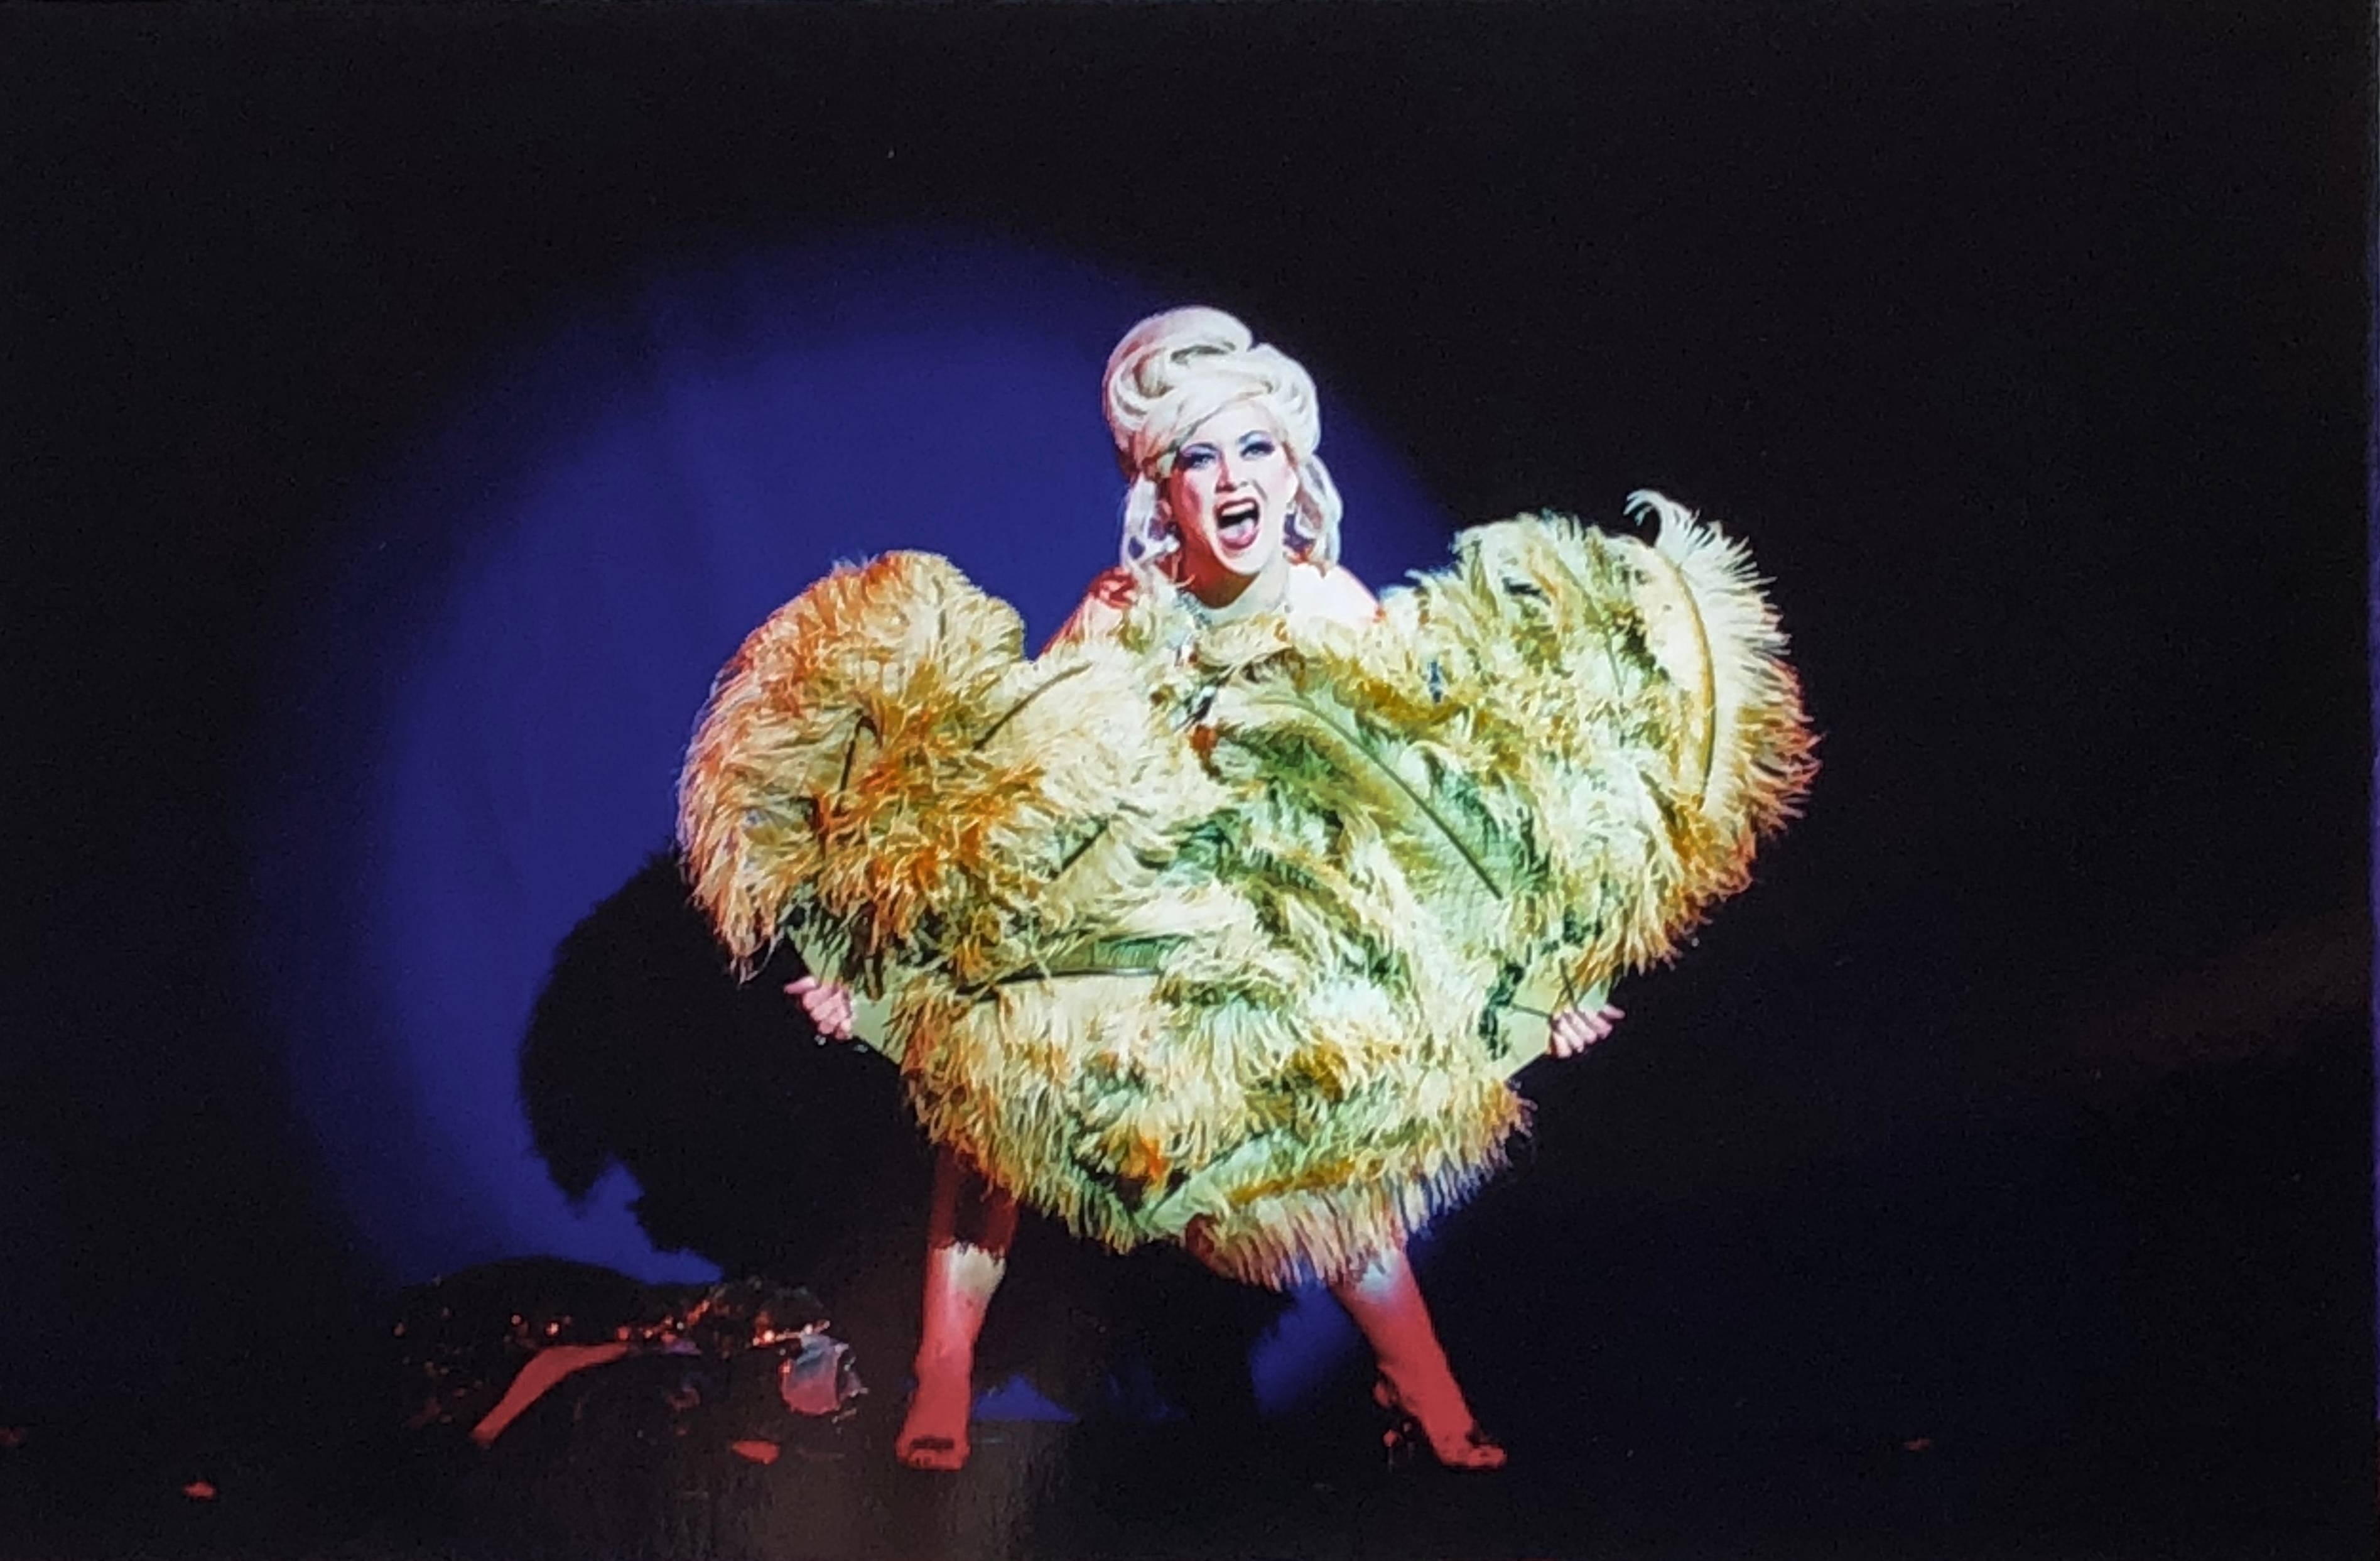 Richard Heeps Color Photograph - Burlesque Series, Martini Fan Dance XIV, Tease-O-Rama, Hollywood, Los Angeles